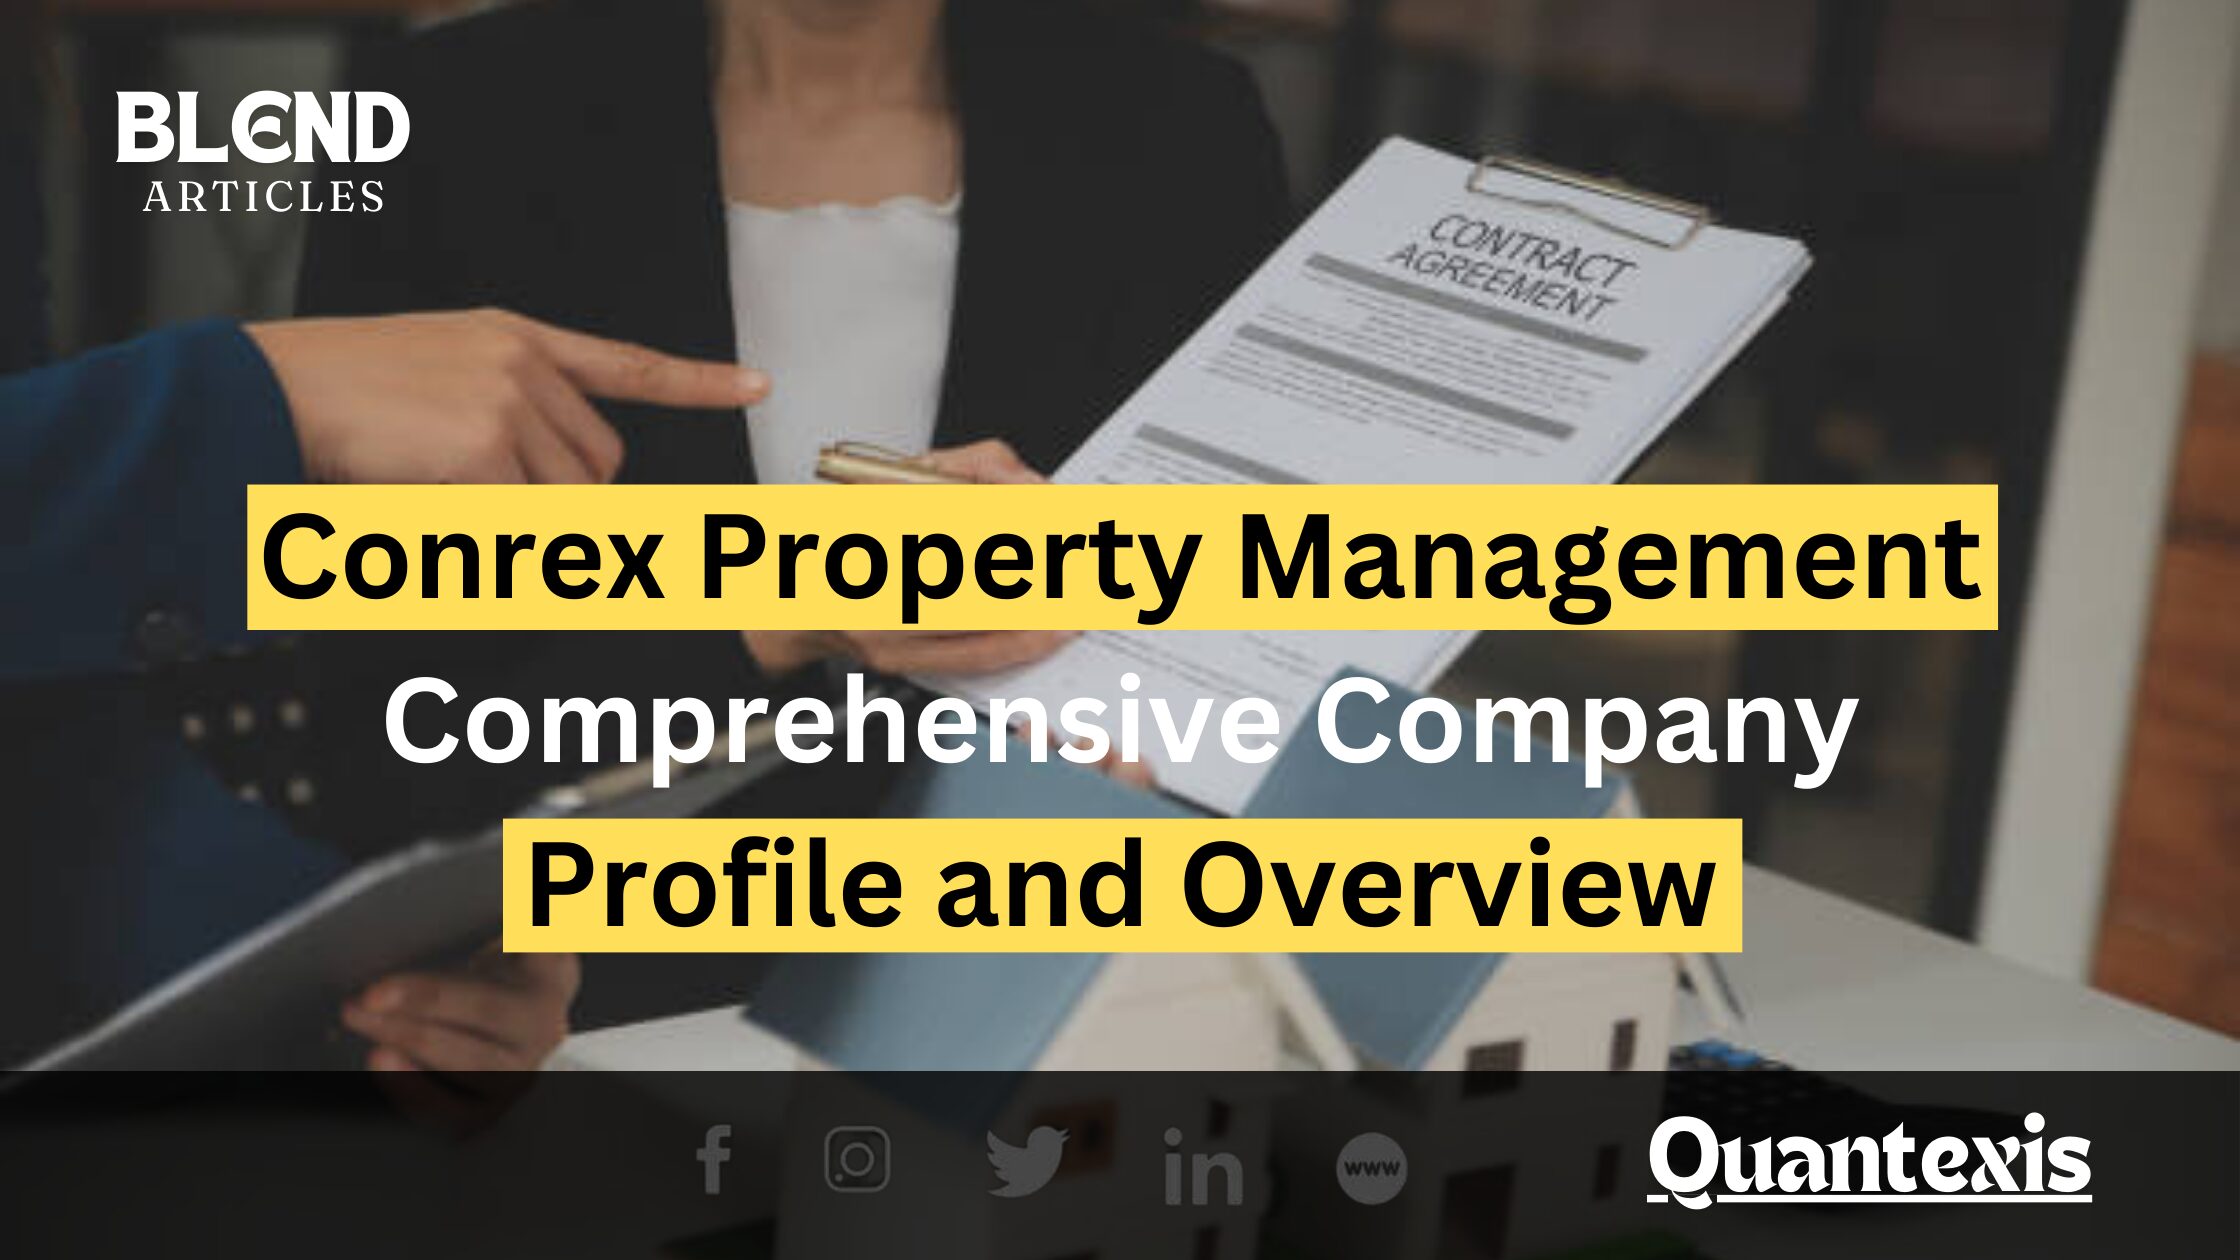 Conrex Property Management: